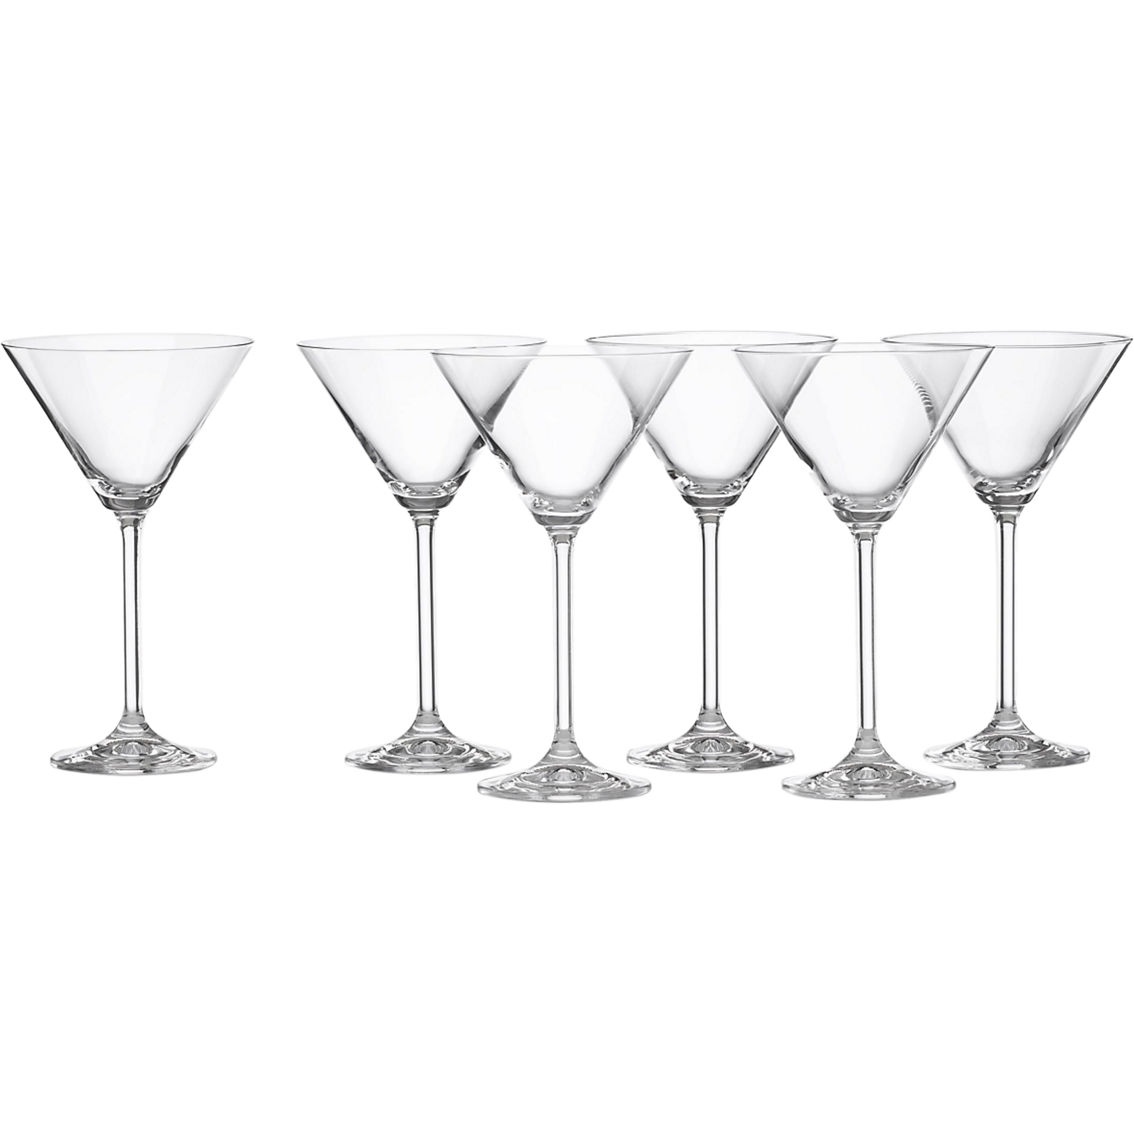 Lenox Tuscany Classics 6 pc. Martini Glass Set - Image 2 of 3